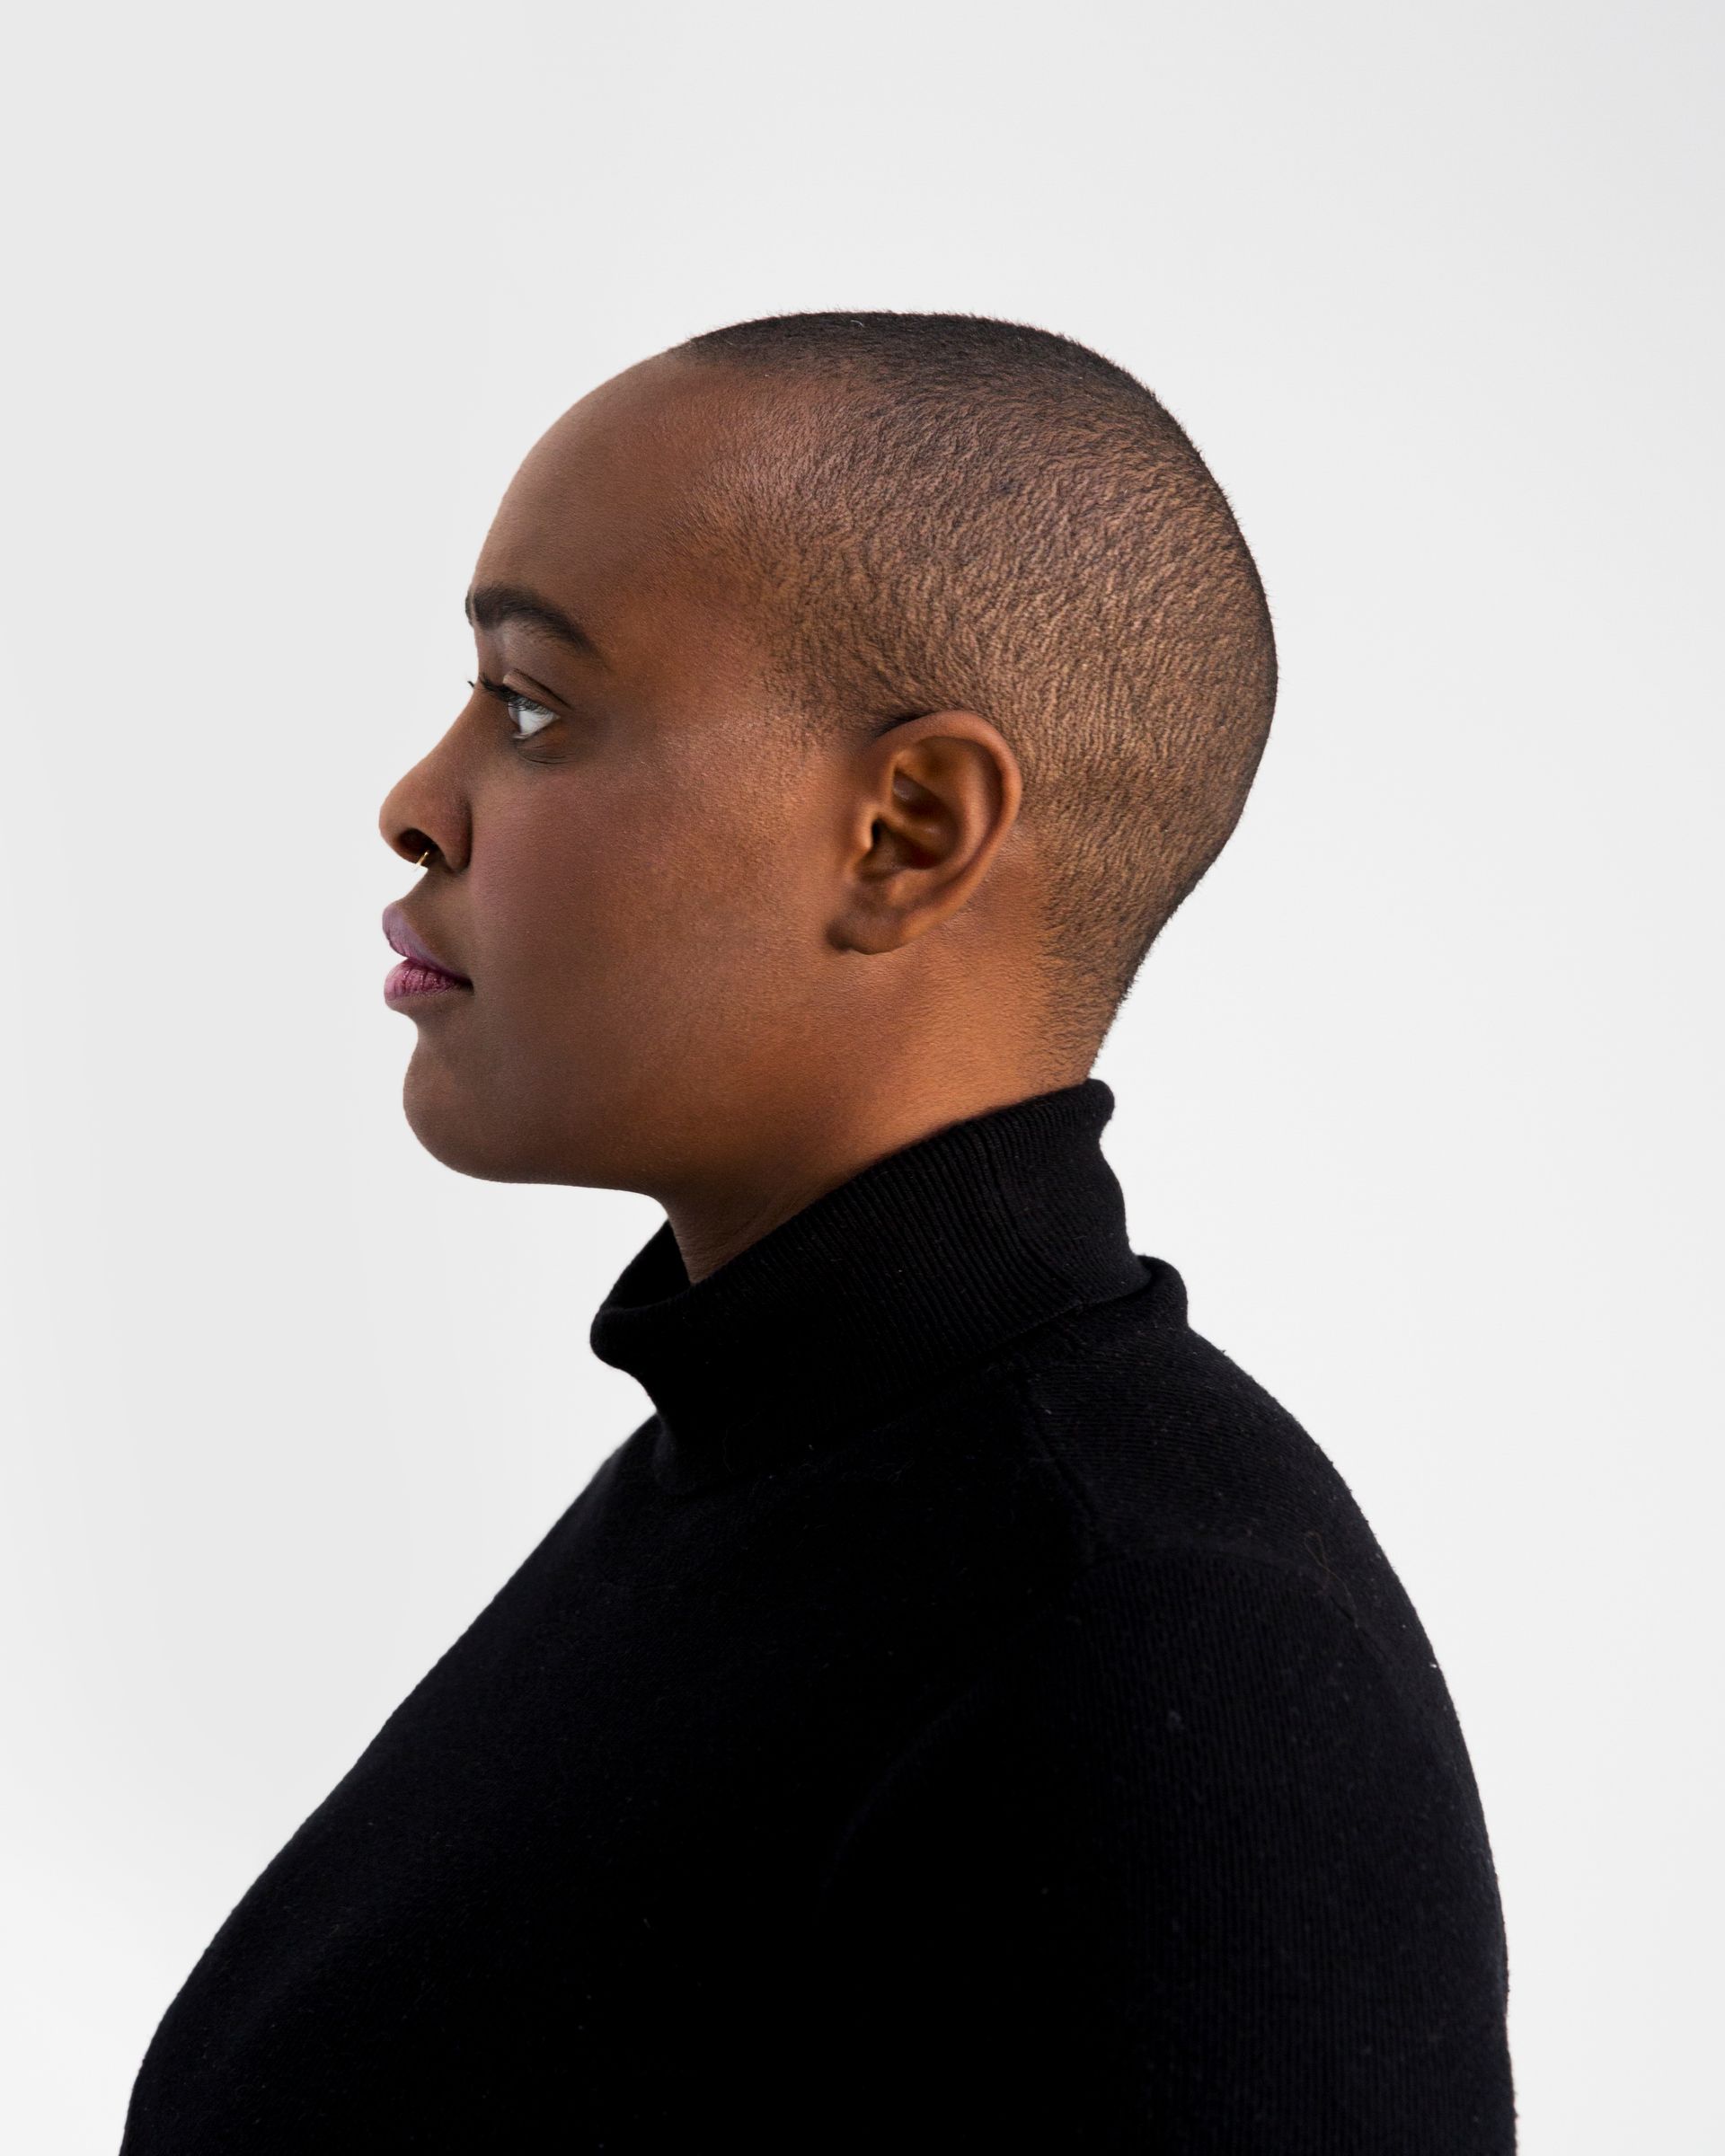 profile headshot of bald african american woman